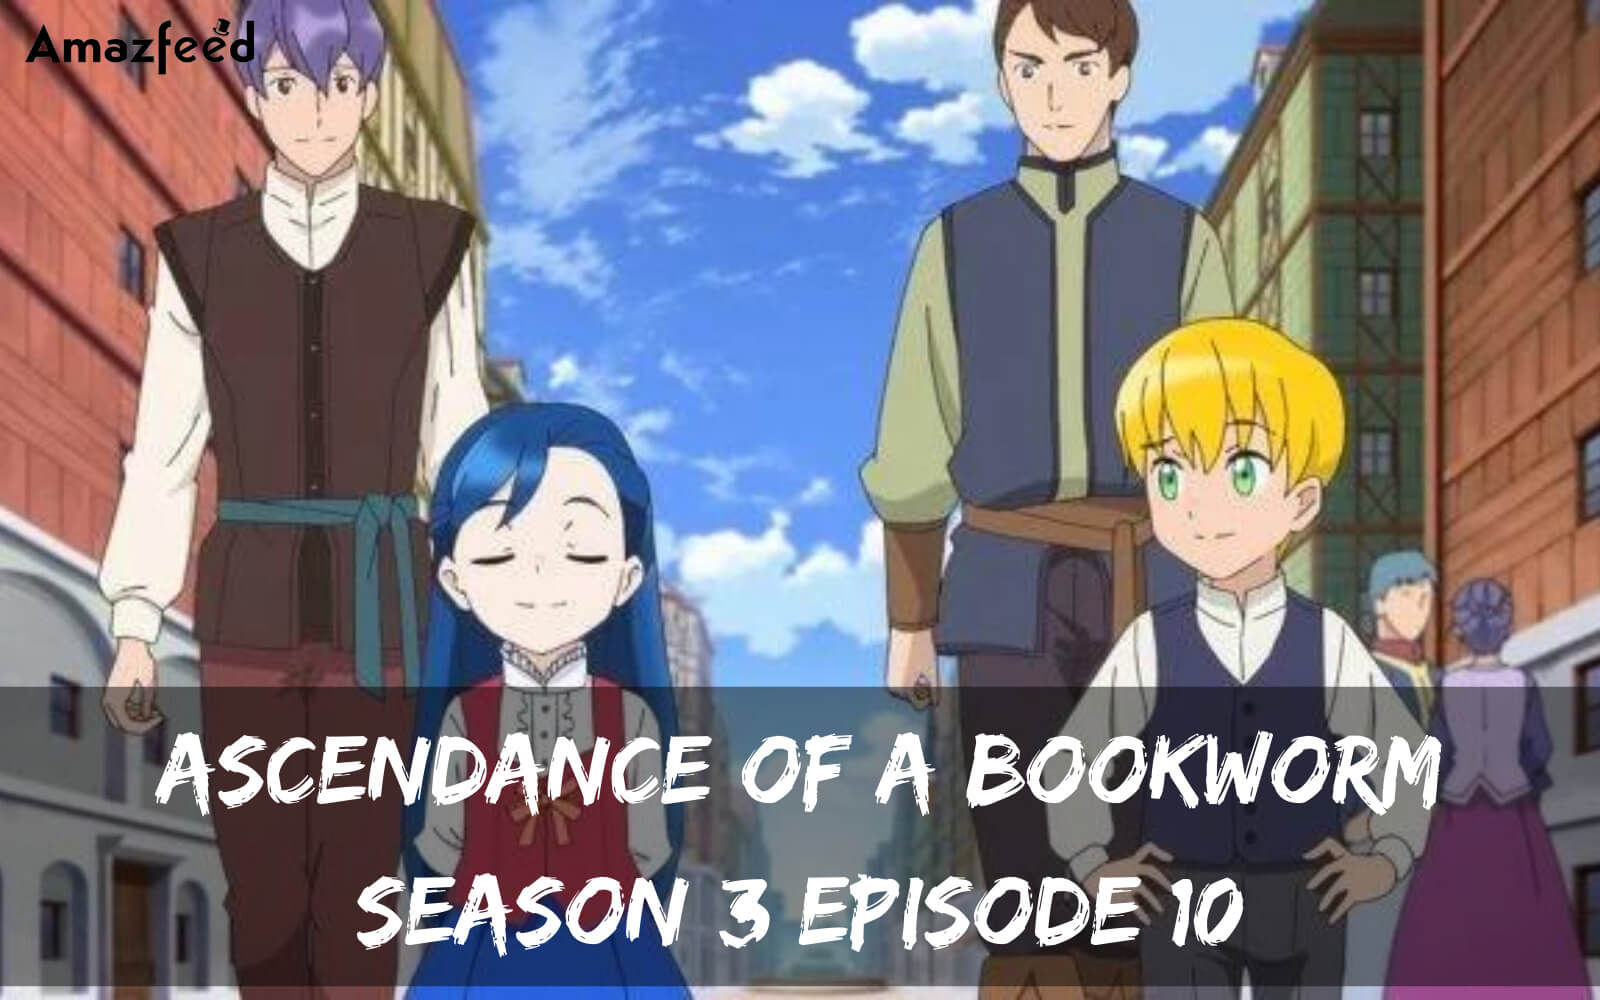 Ascendance of a Bookworm Season 3 Episode 10 release date